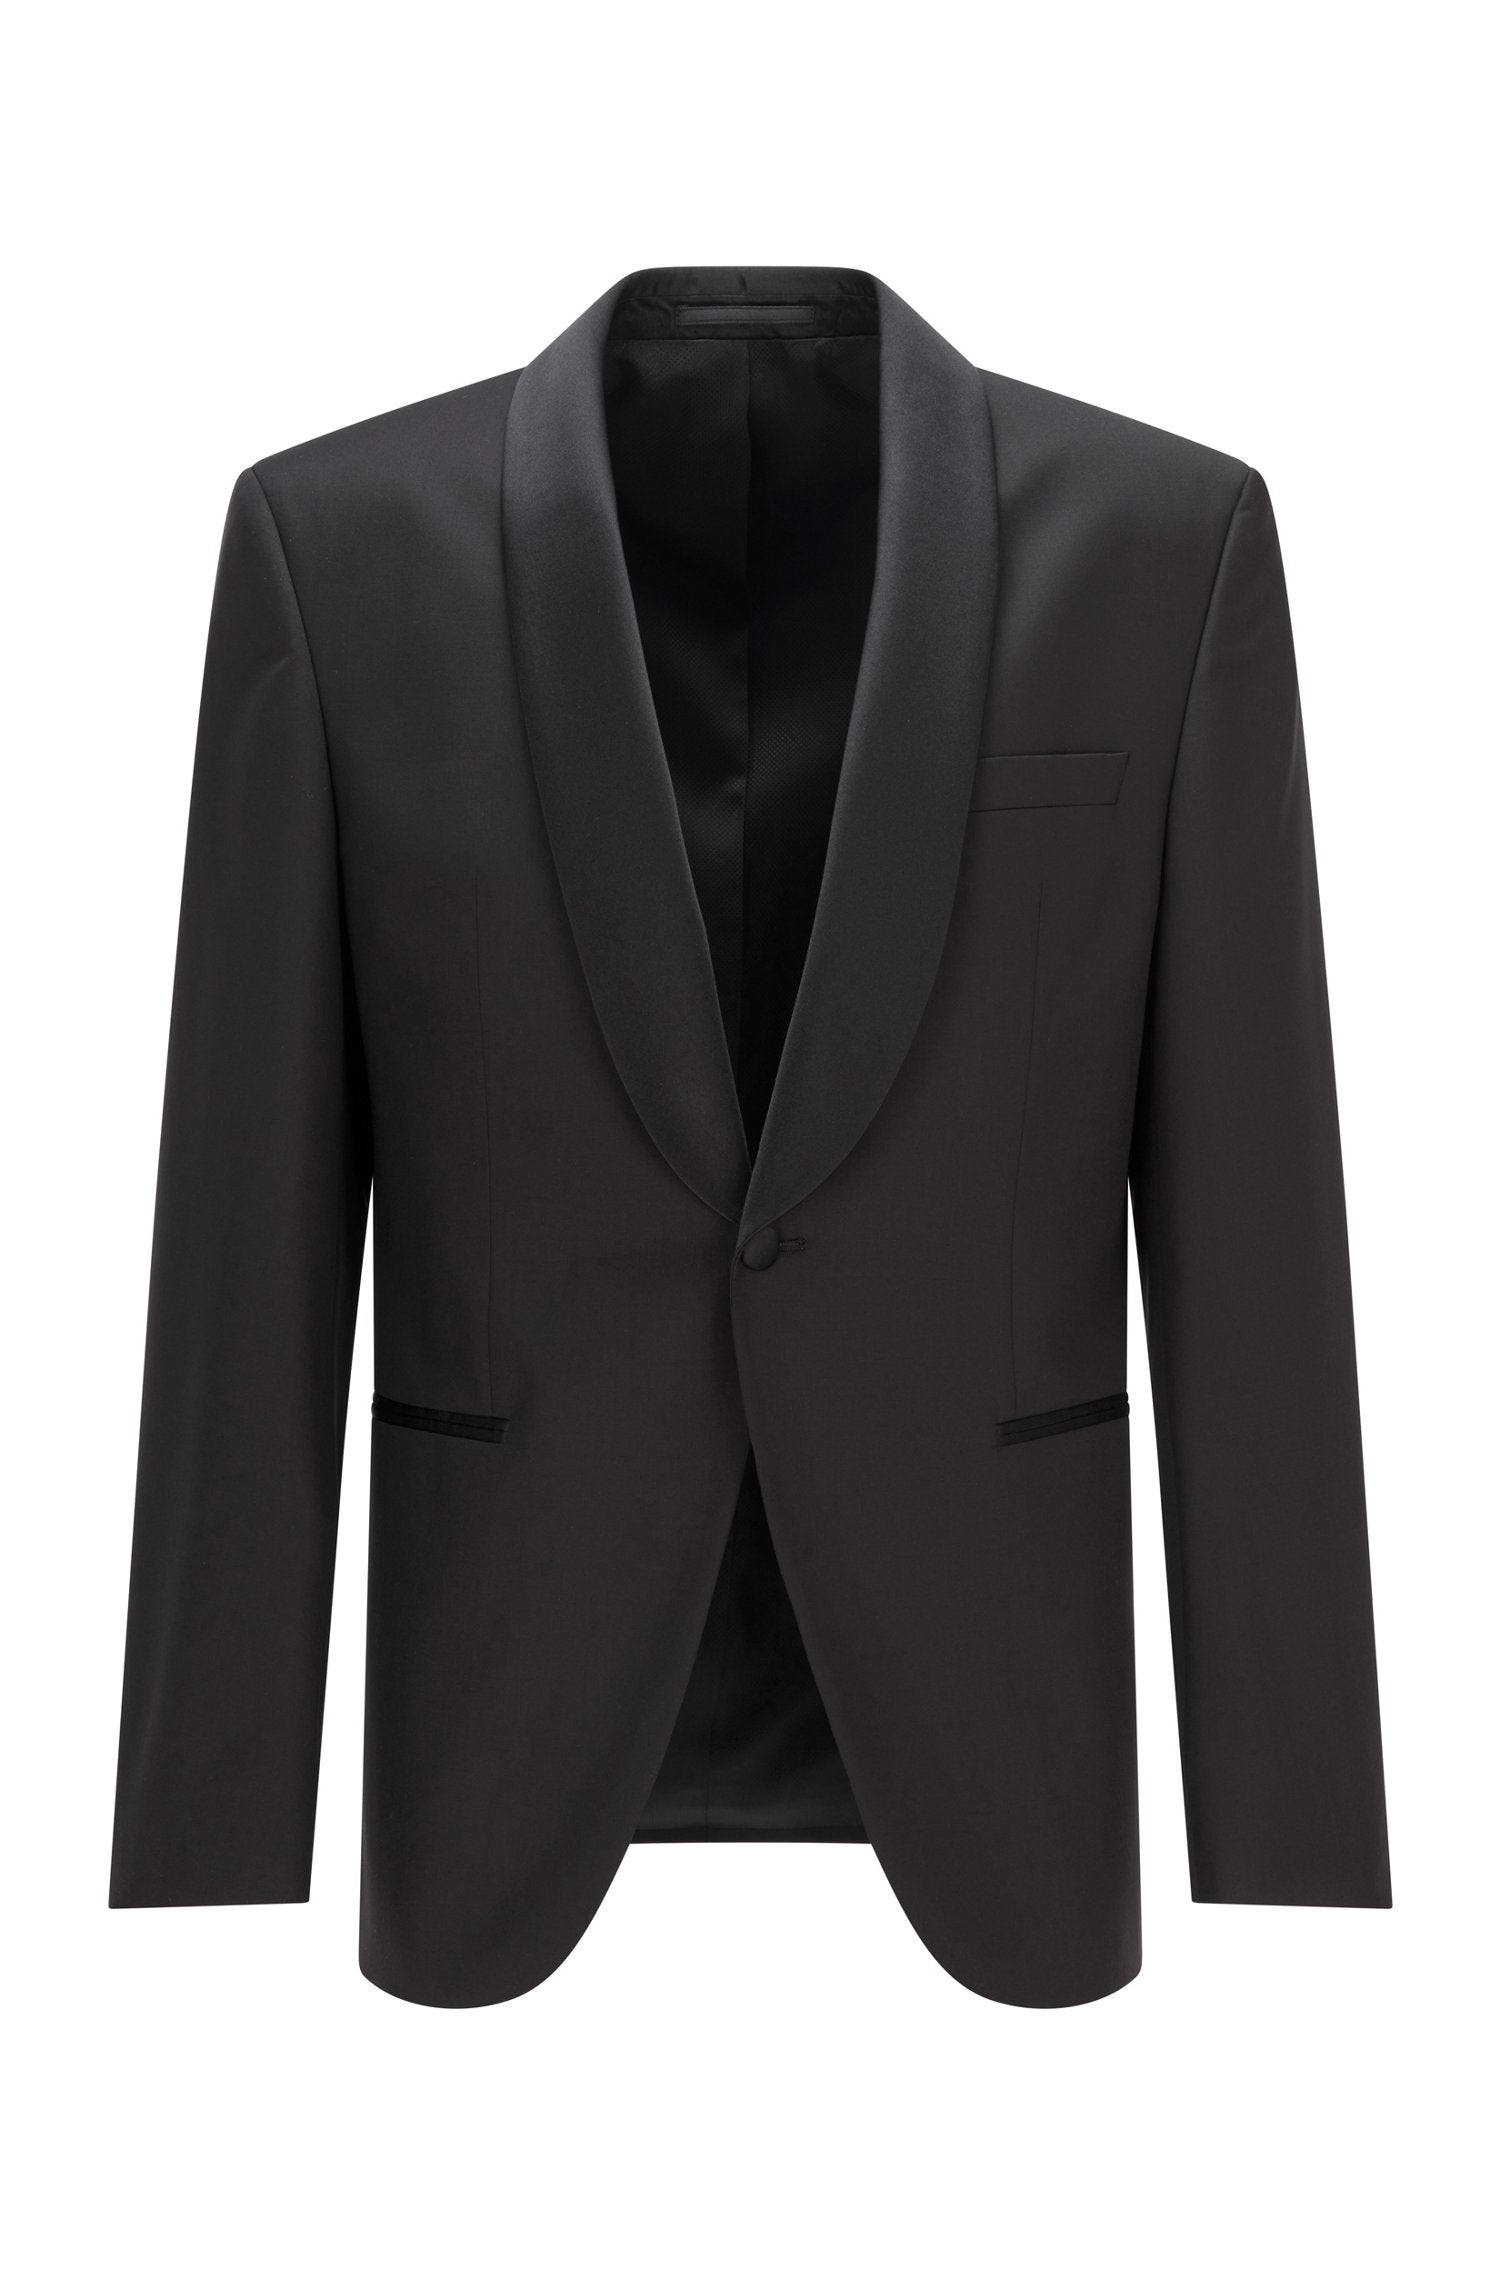 HUGO BOSS - JEFRON_CYL Black Virgin Wool Dress Jacket in Regular Fit With Shawl Lapels 50379909 001